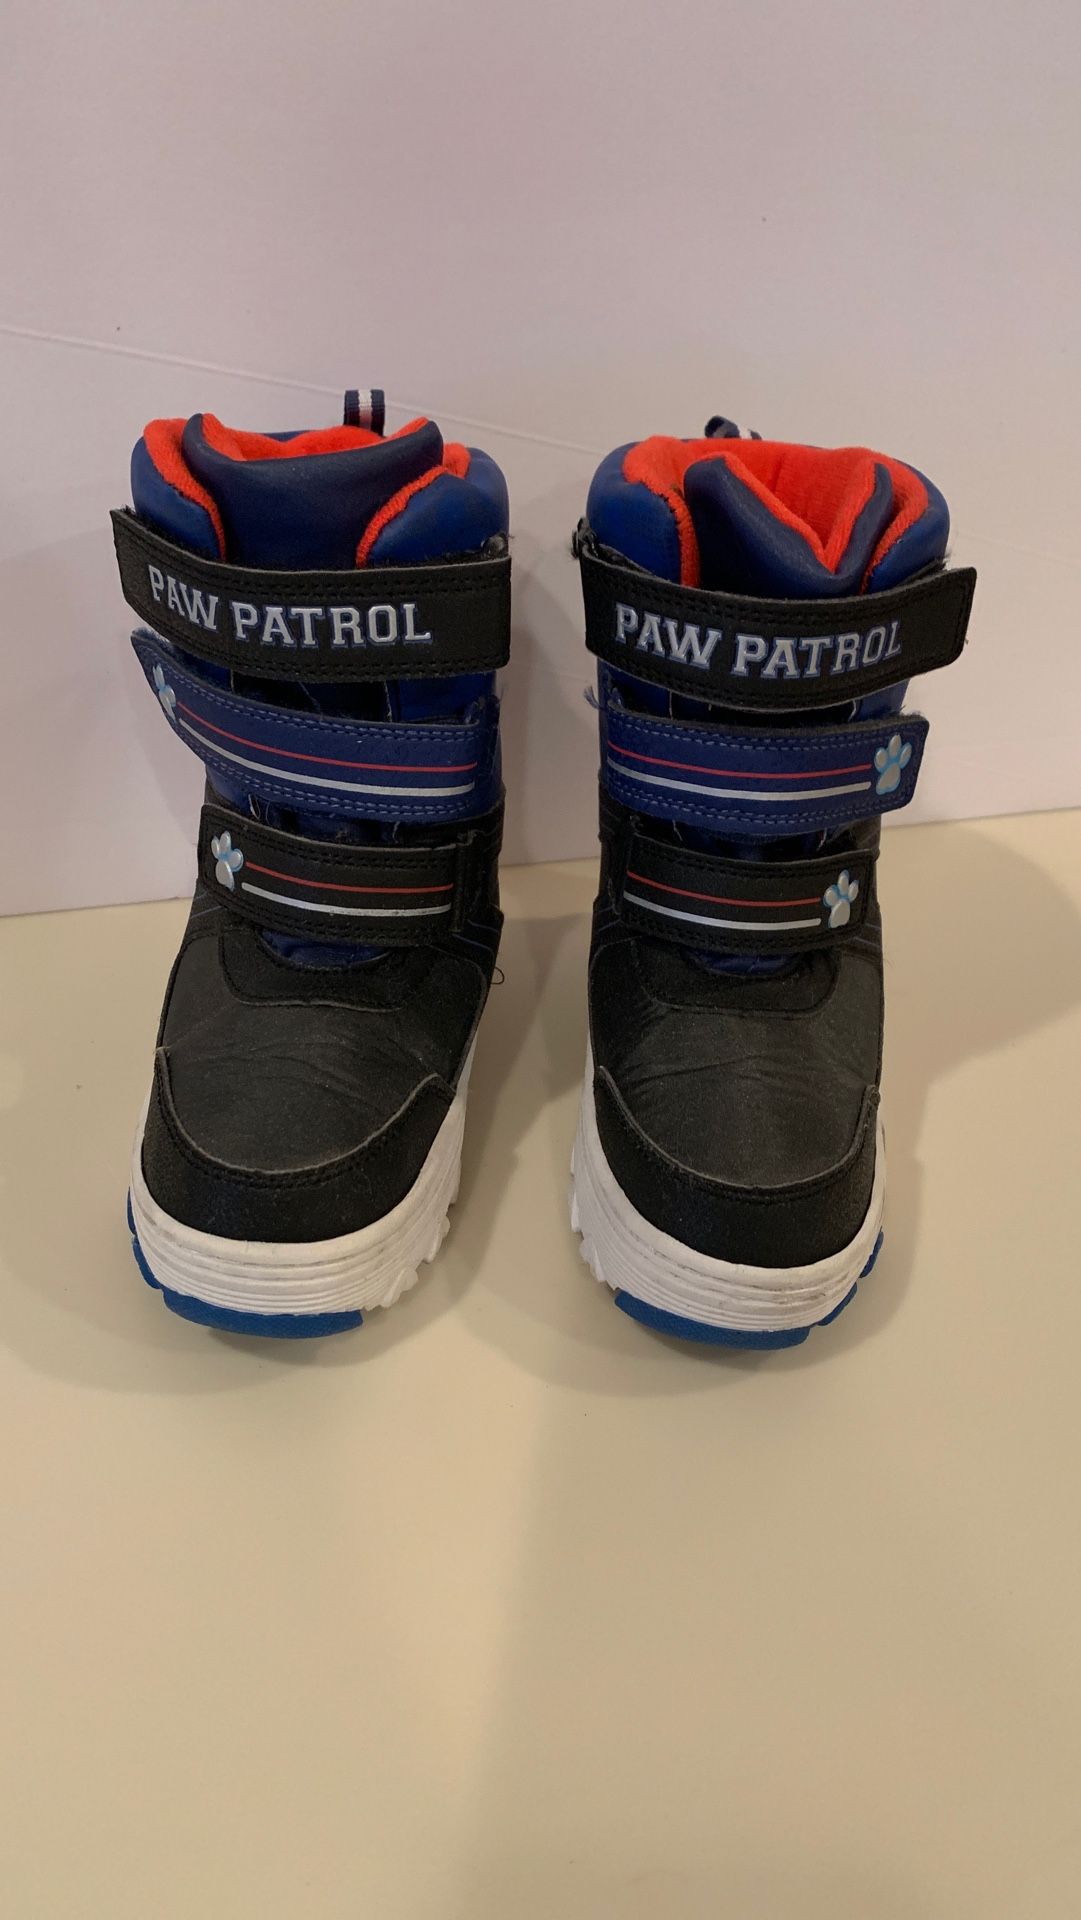 Kids Paw patrol snow boots